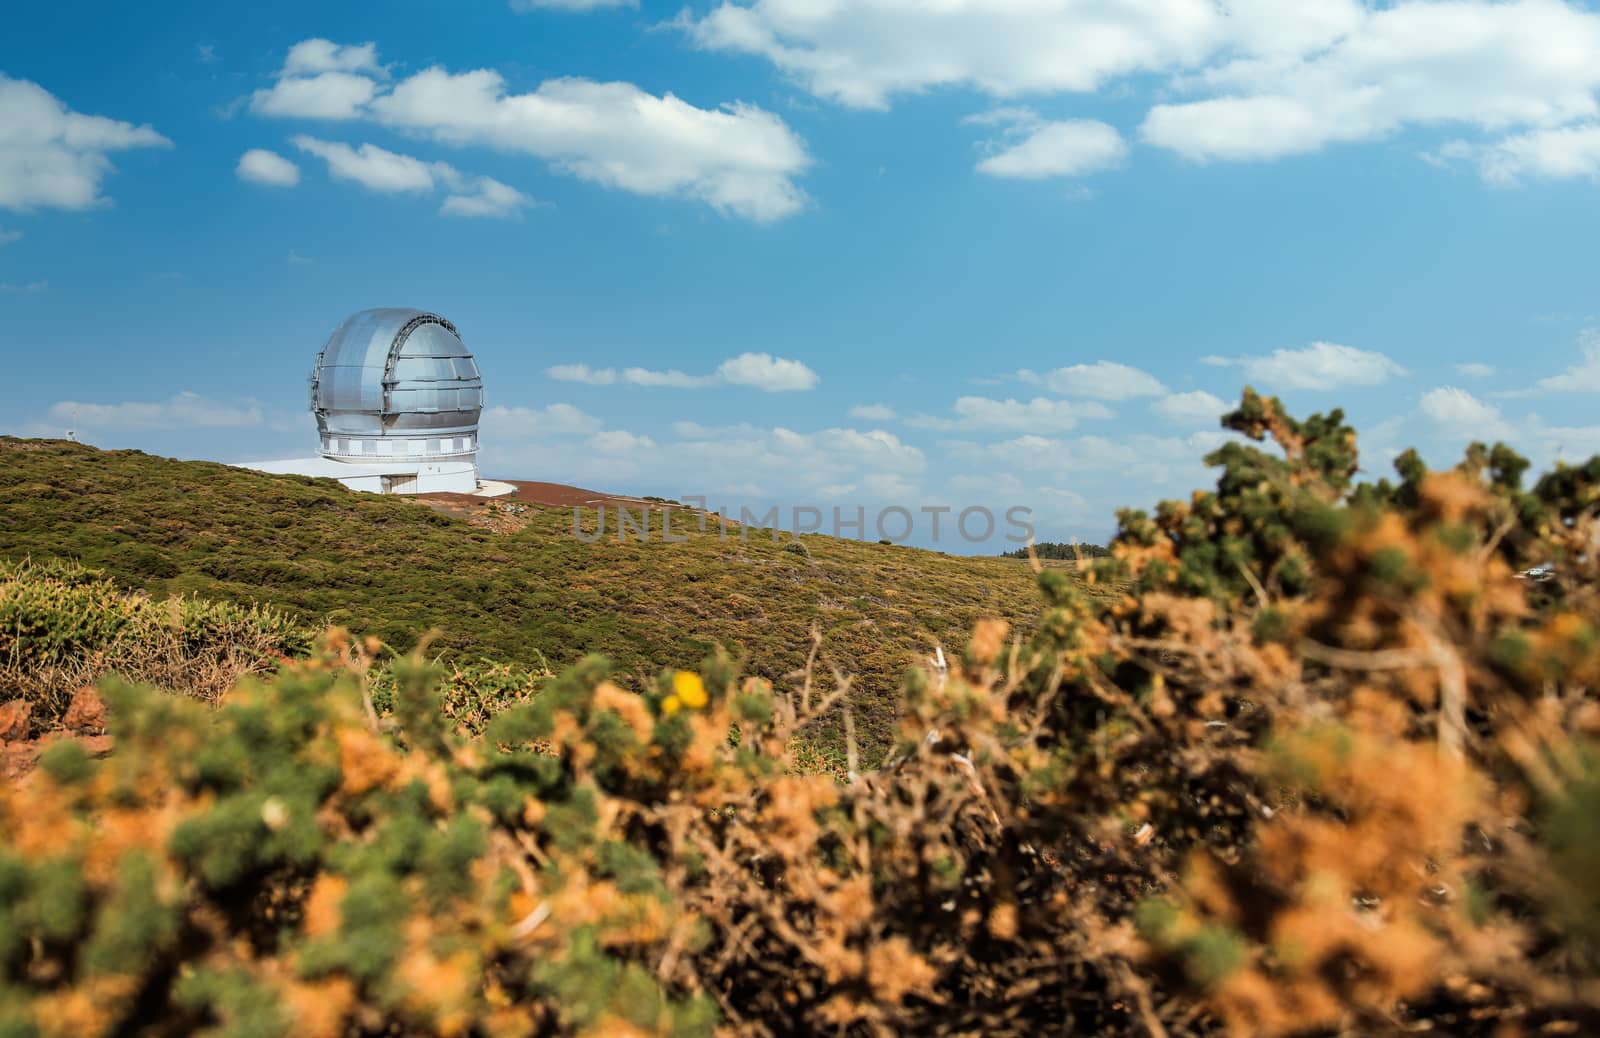 Gran Telescopio in La Palma, Canary Islands, Spain by COffe